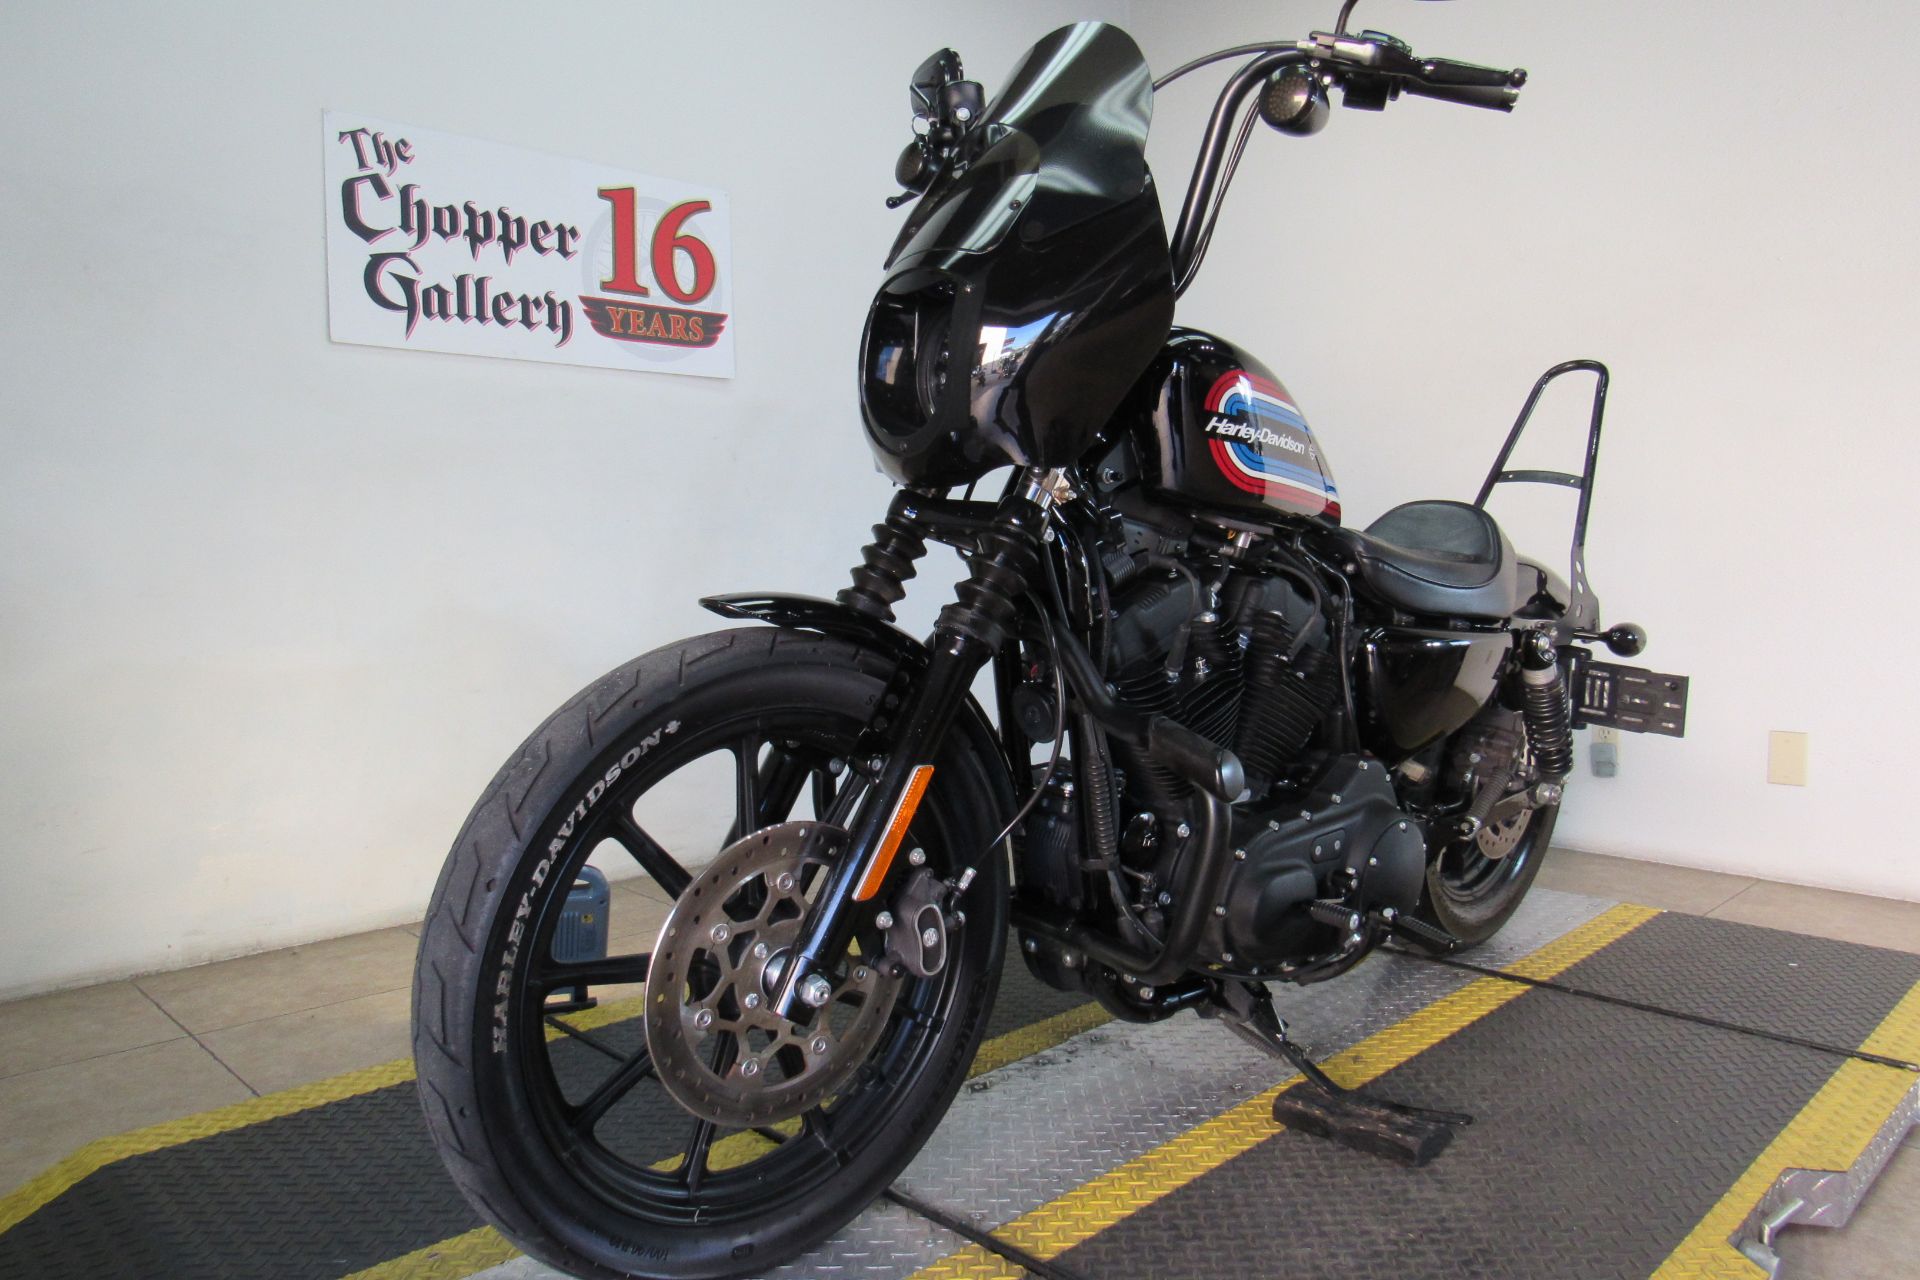 2020 Harley-Davidson Iron 1200™ in Temecula, California - Photo 33